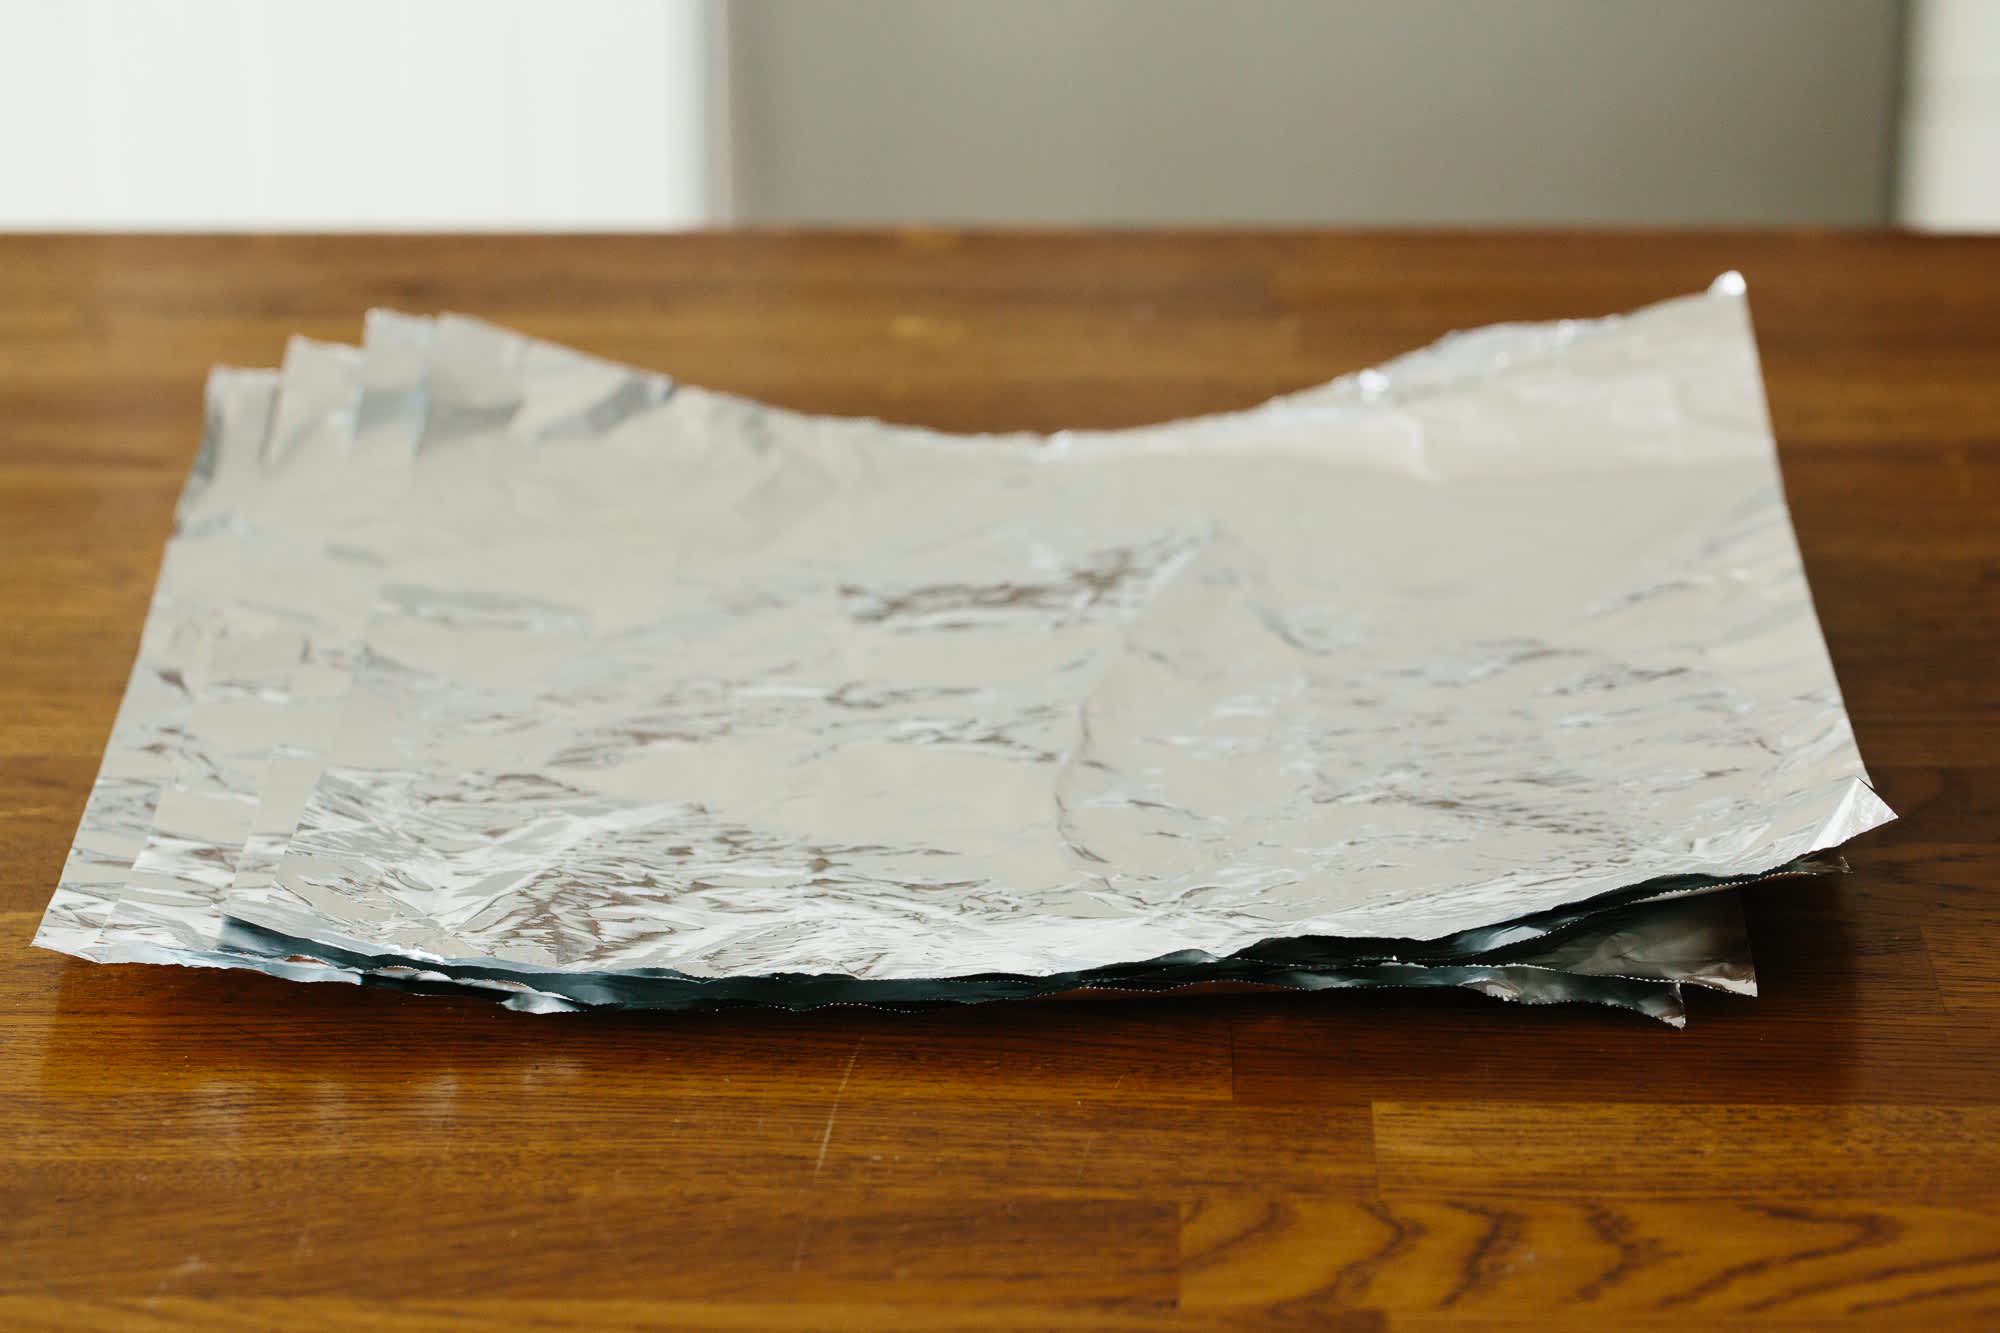 Is Aluminum Foil Recyclable?